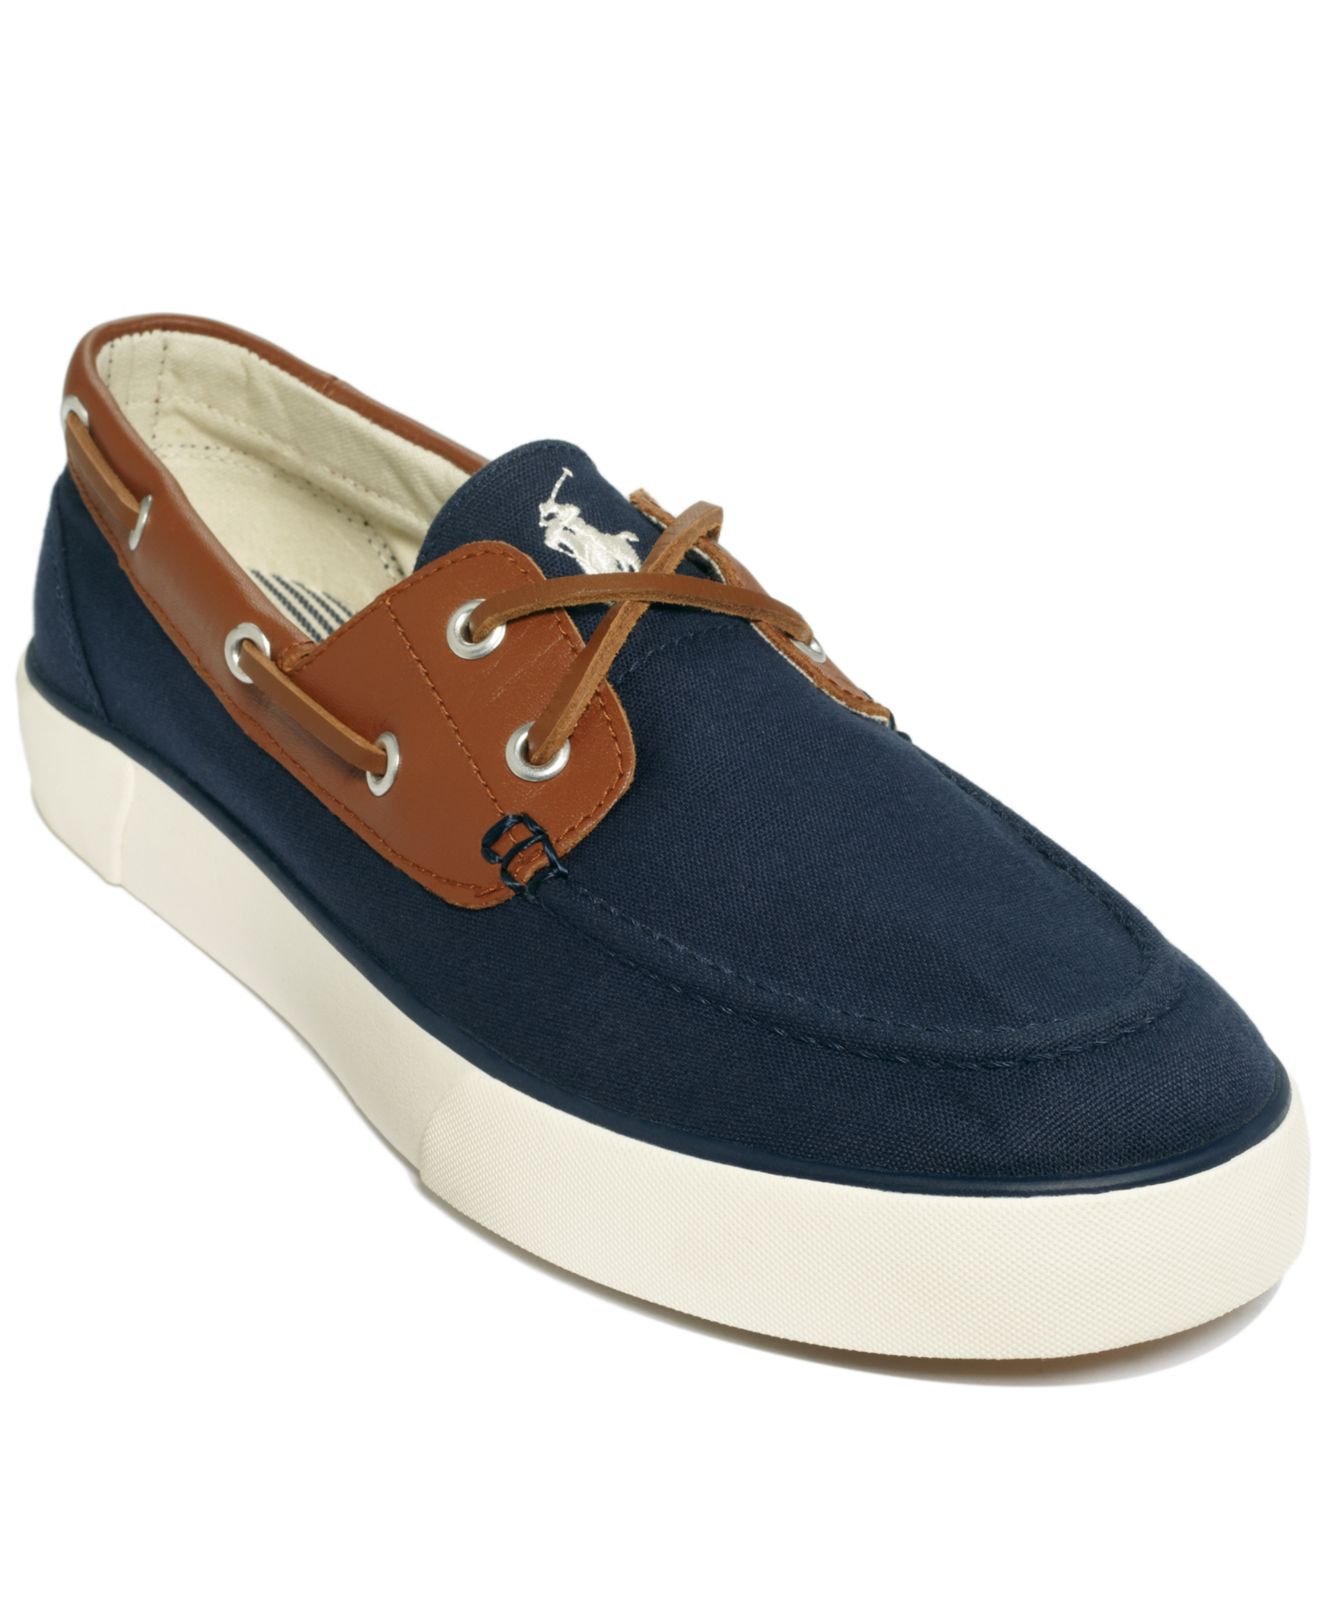 Polo Ralph Lauren Rylander Boat Shoes in Navy/Tan/Cream (Blue) for Men -  Lyst